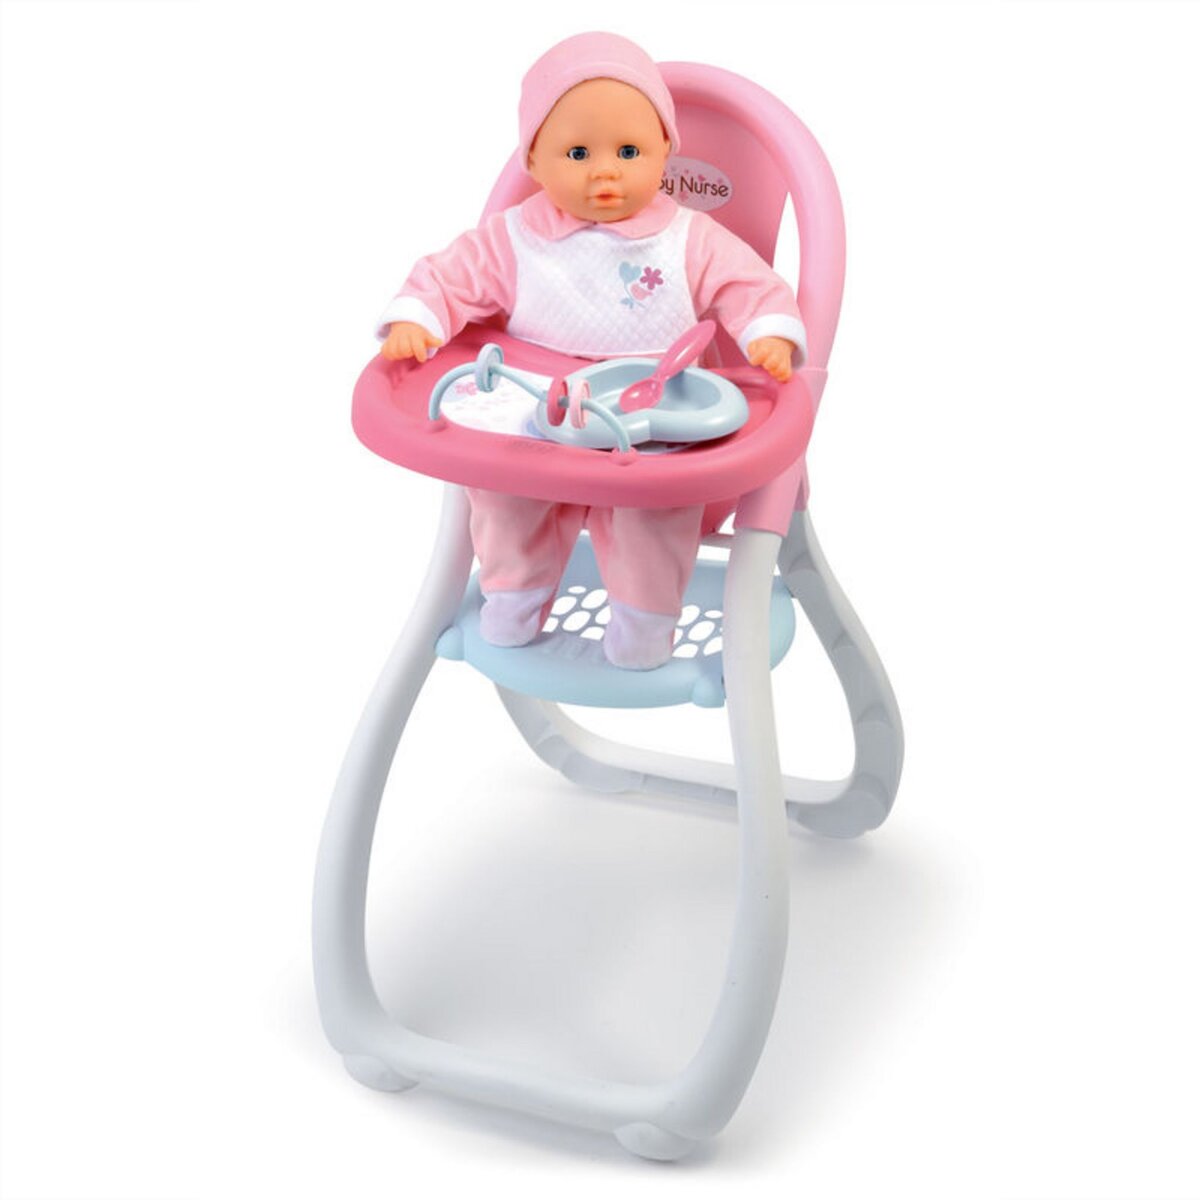 SMOBY Chaise haute Baby Nurse pas cher 